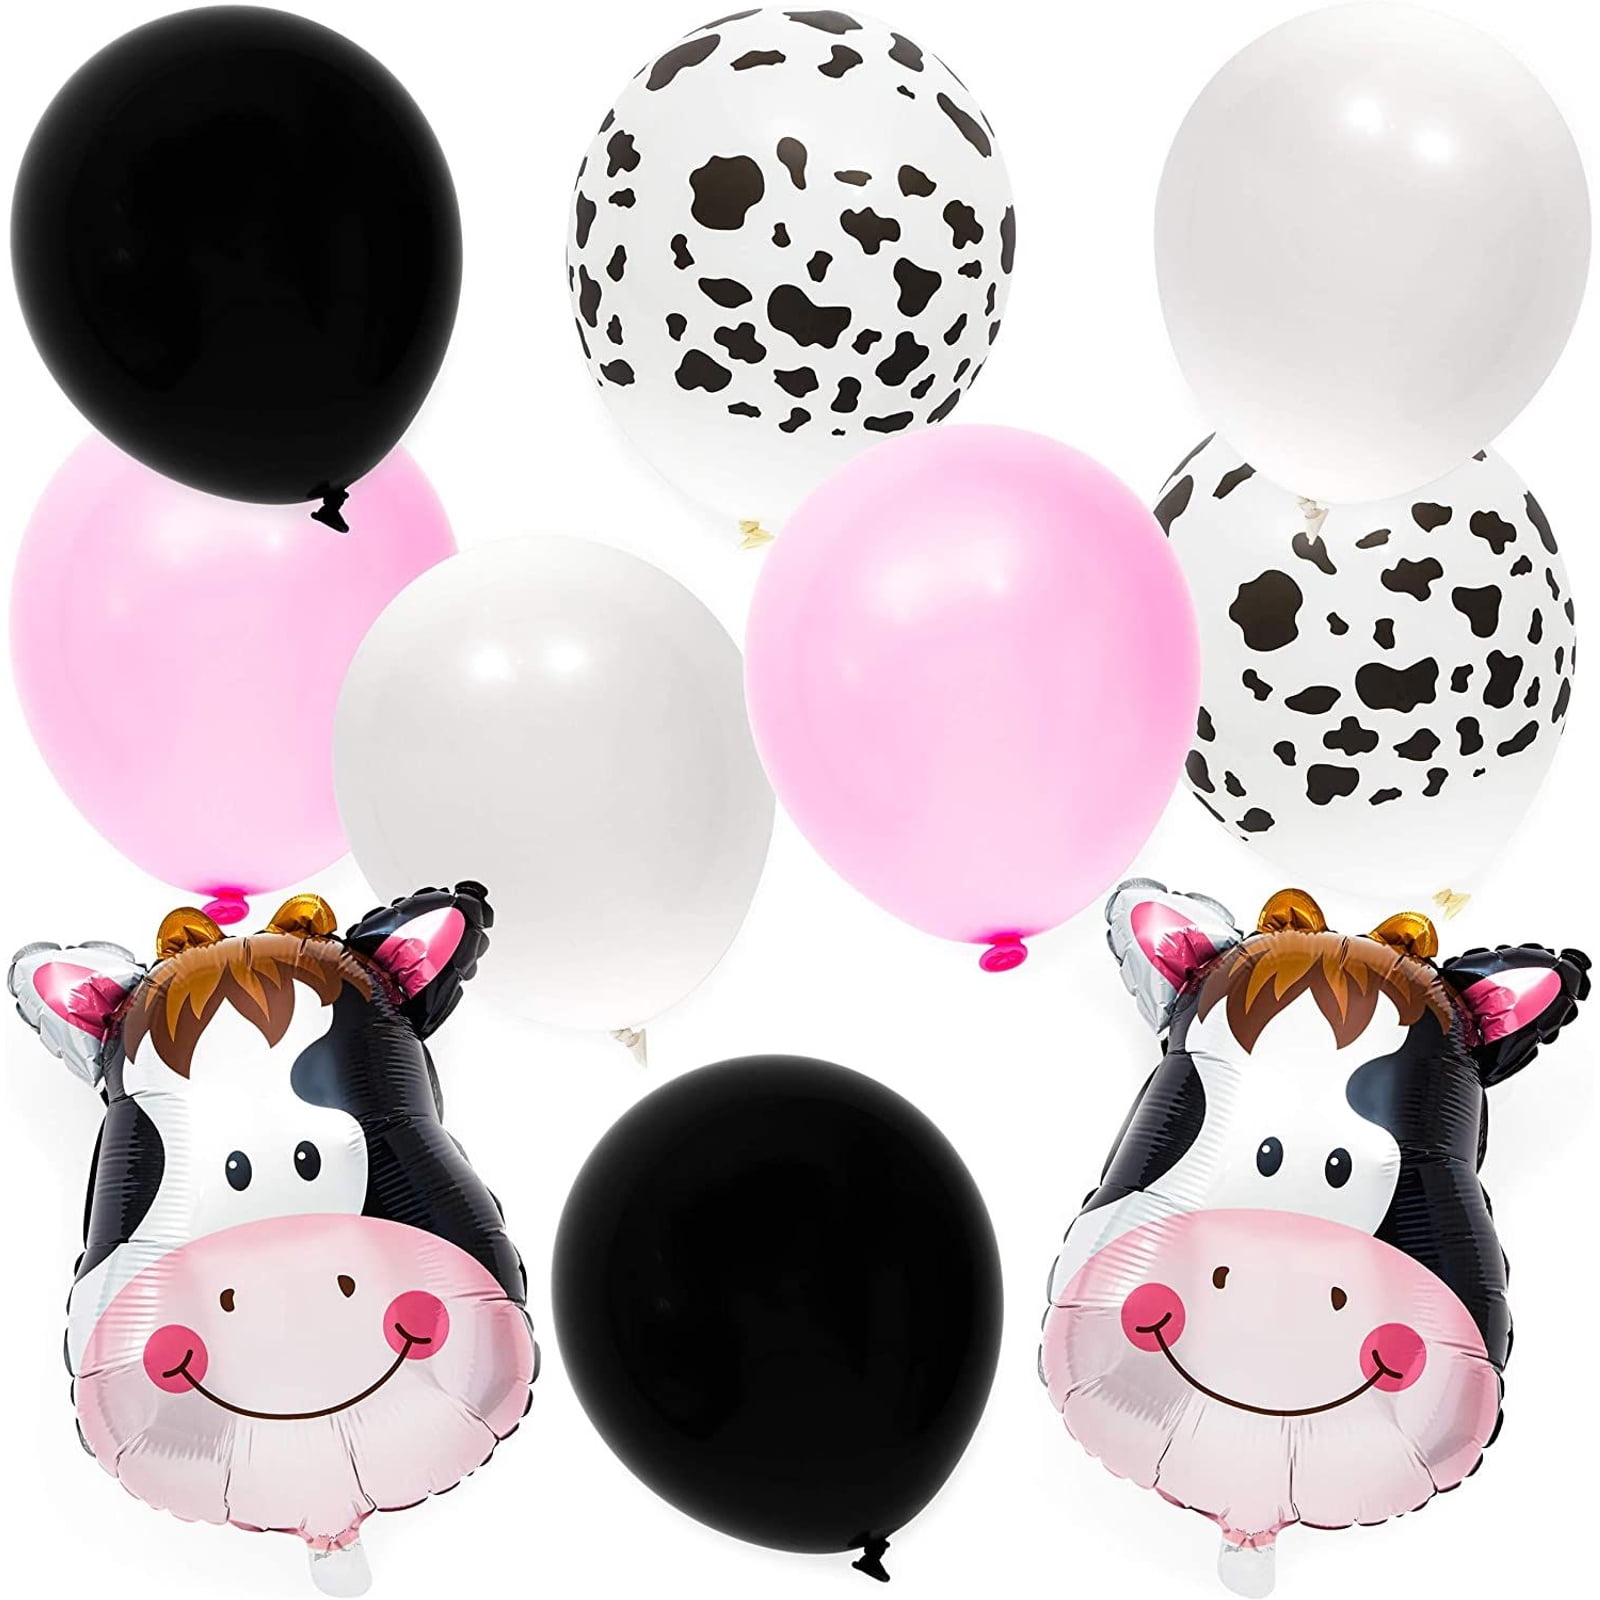 Cow Print Animal Black White Children's Birthday Party Bunting Banner